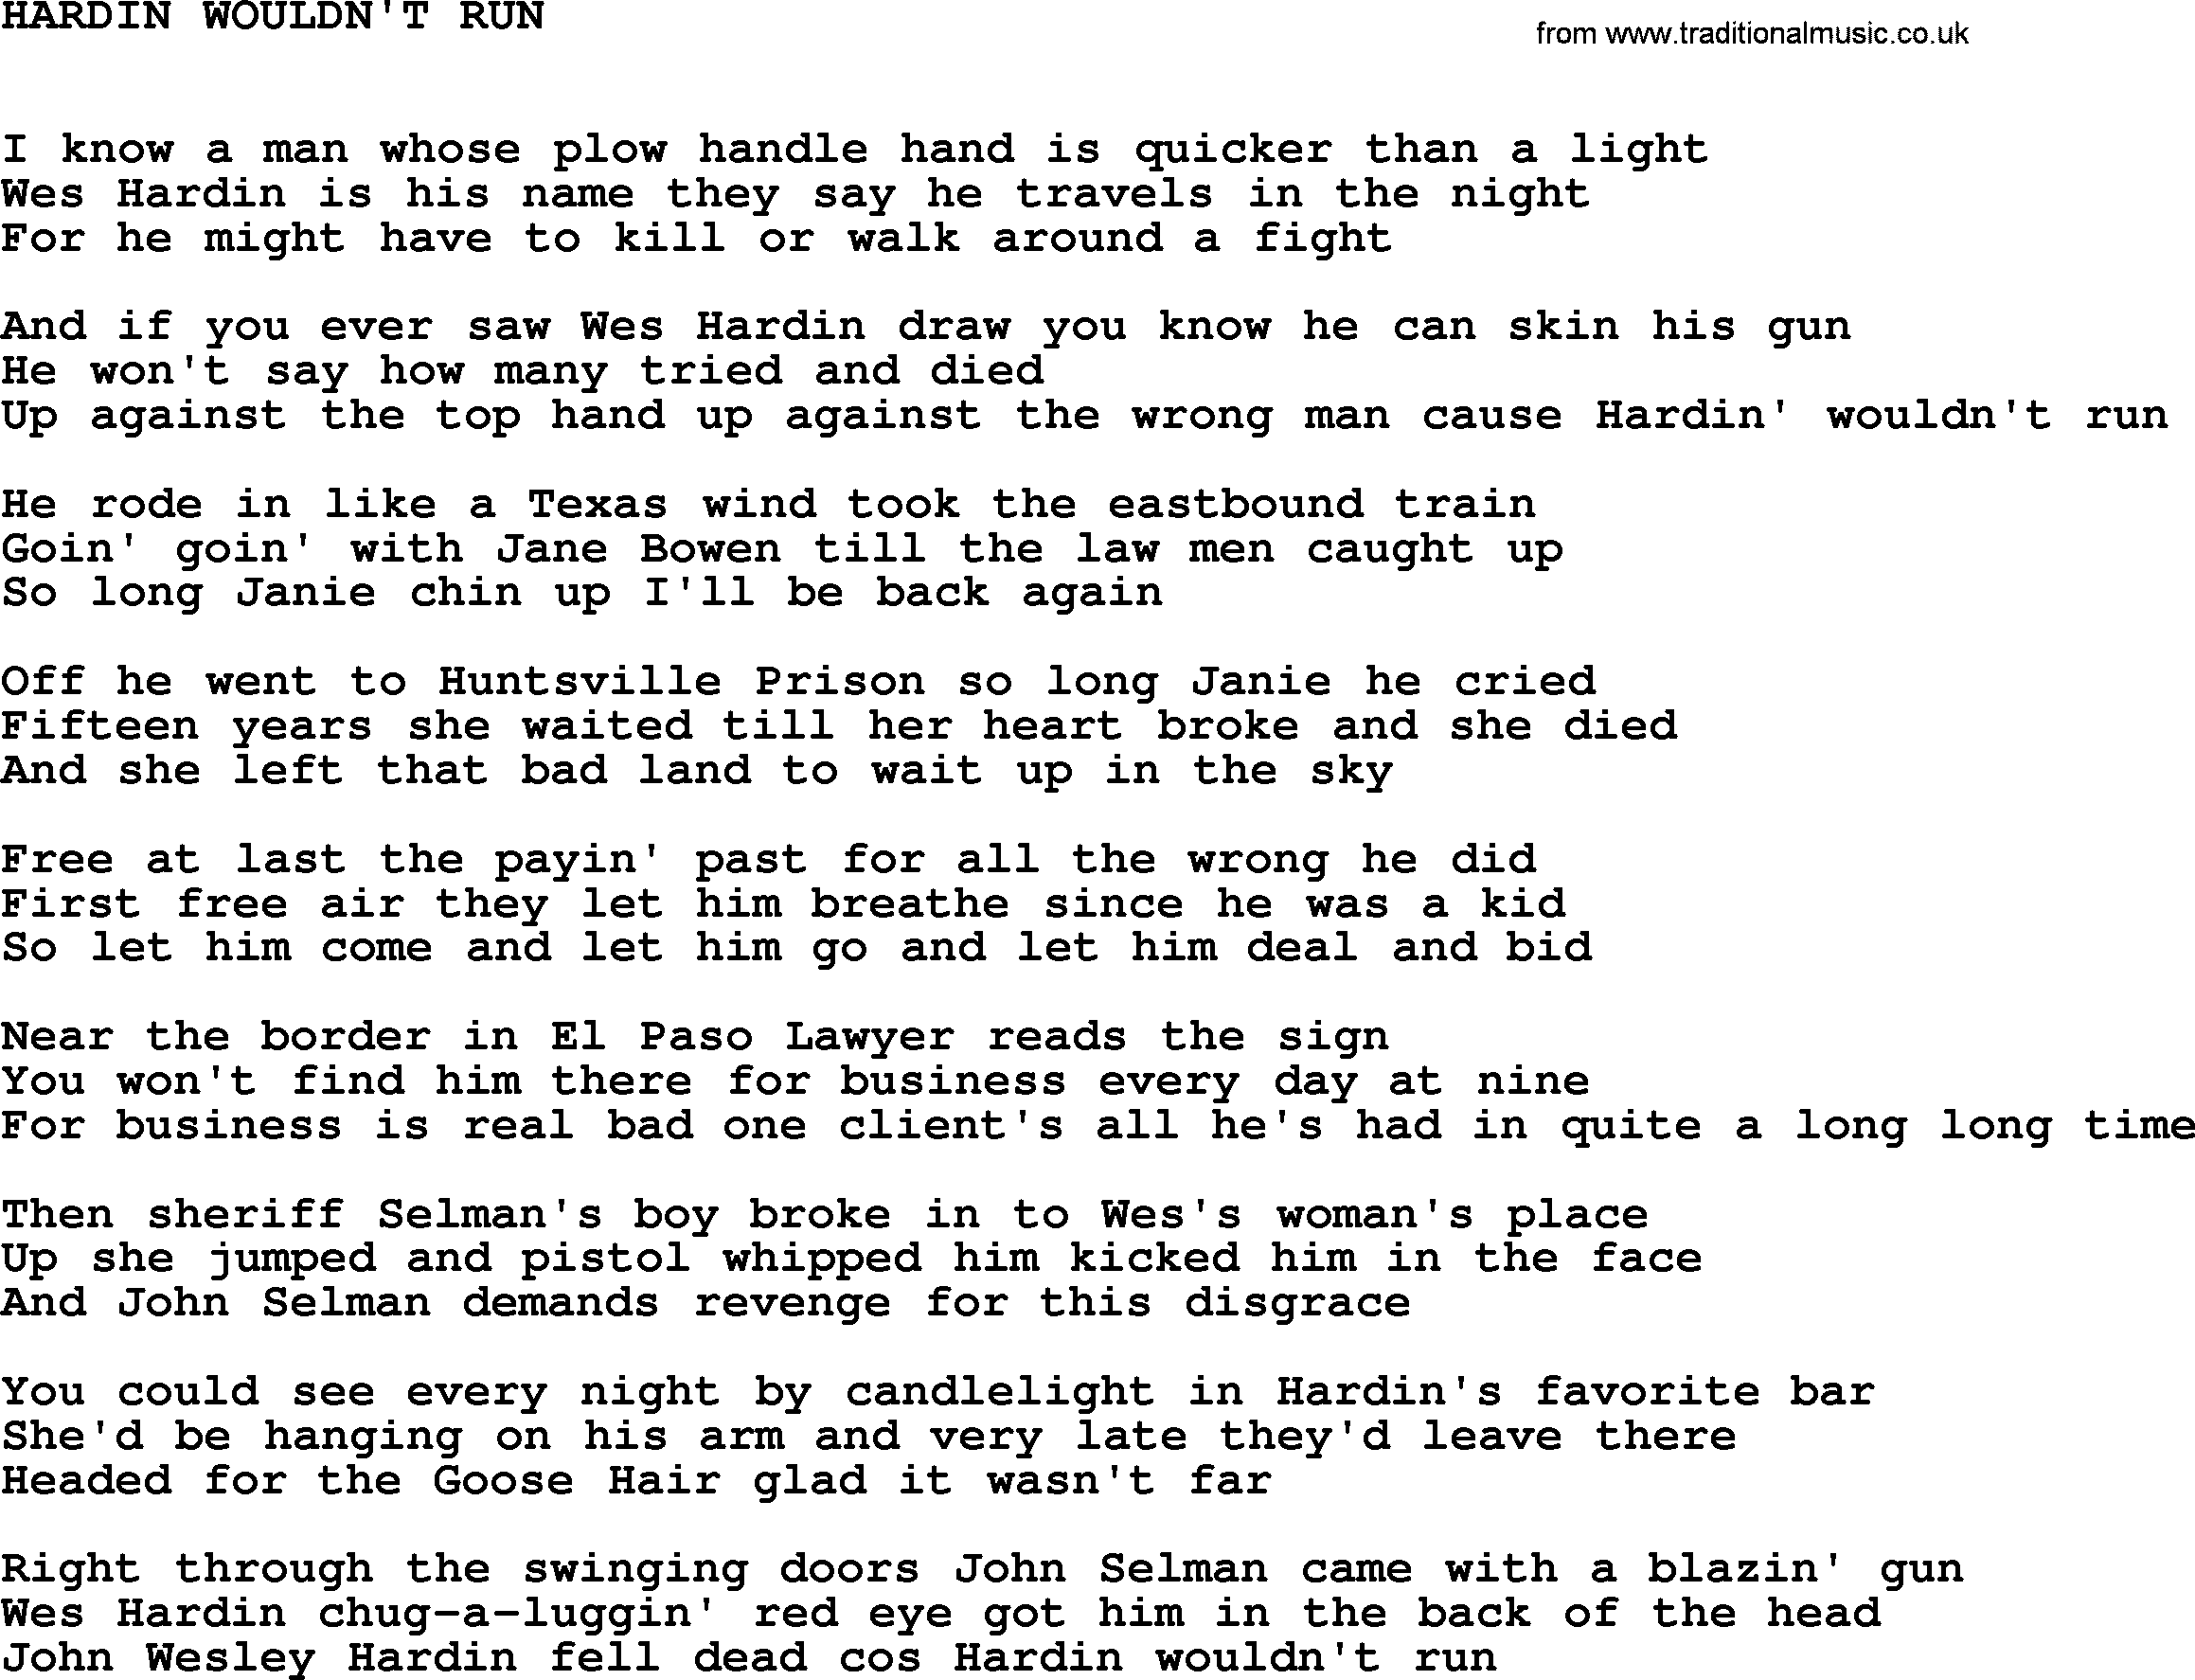 Johnny Cash song Hardin Wouldn't Run.txt lyrics